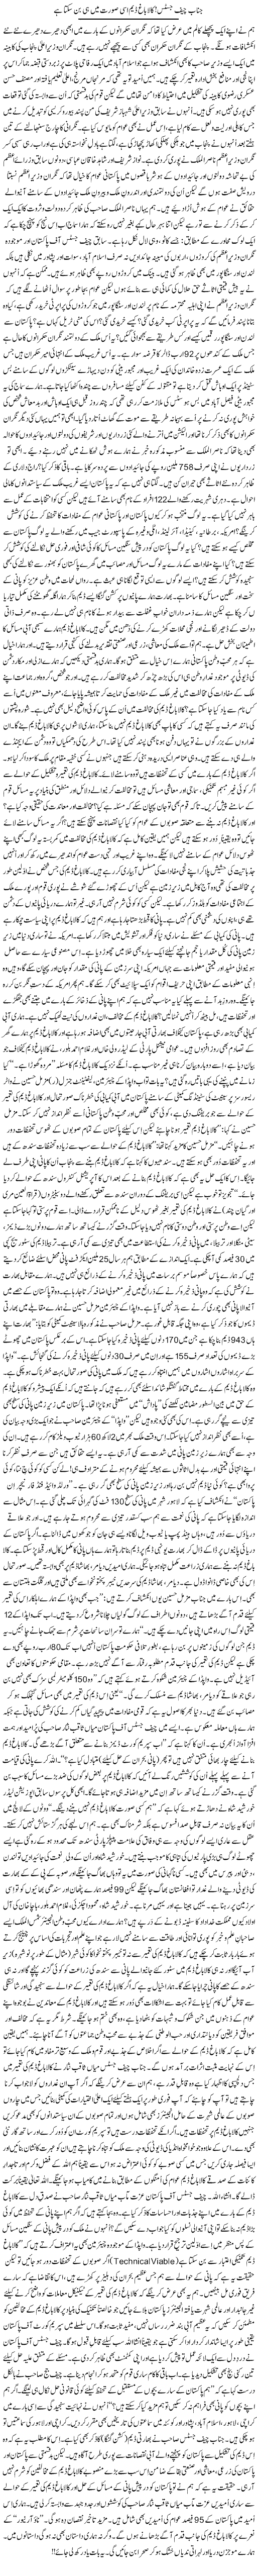 Janab Chief Justice! Kalabagh Dam Isi Soorat Mein Hi Ban Sakta Hai | Rehmat Ali Razi | Daily Urdu Columns